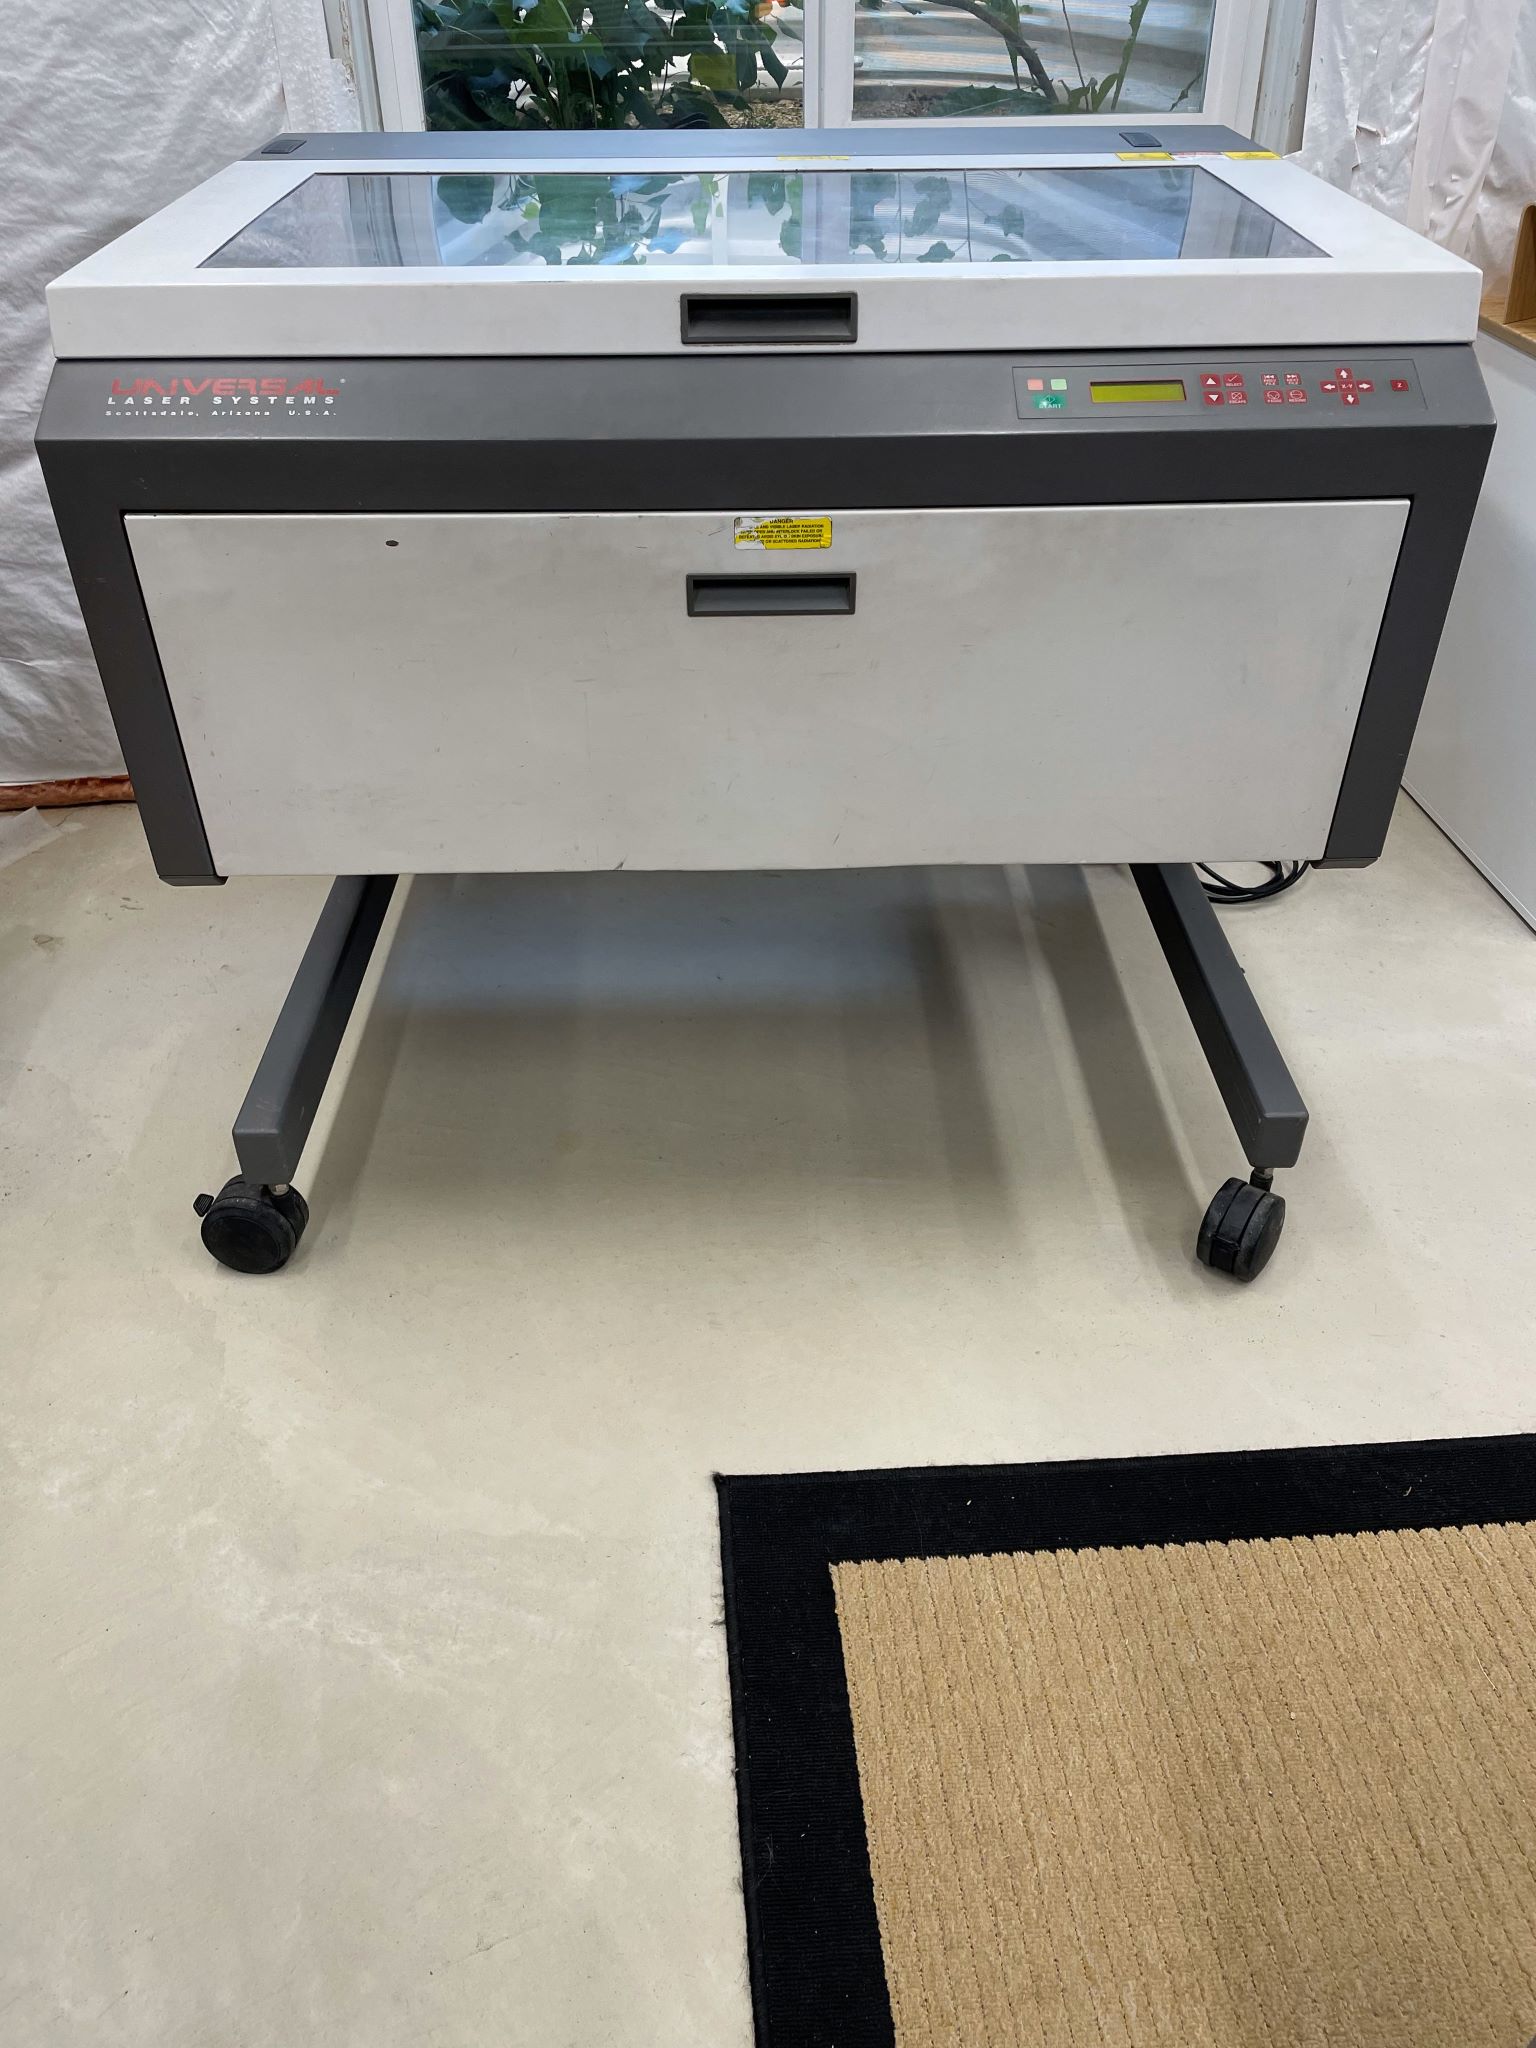 Equipment Lot: Universal Laser Systems Engraver ULS-X660 & Purex International LX 400i Digital Hepa Fume Extractor (Used) Item # UE-112723B